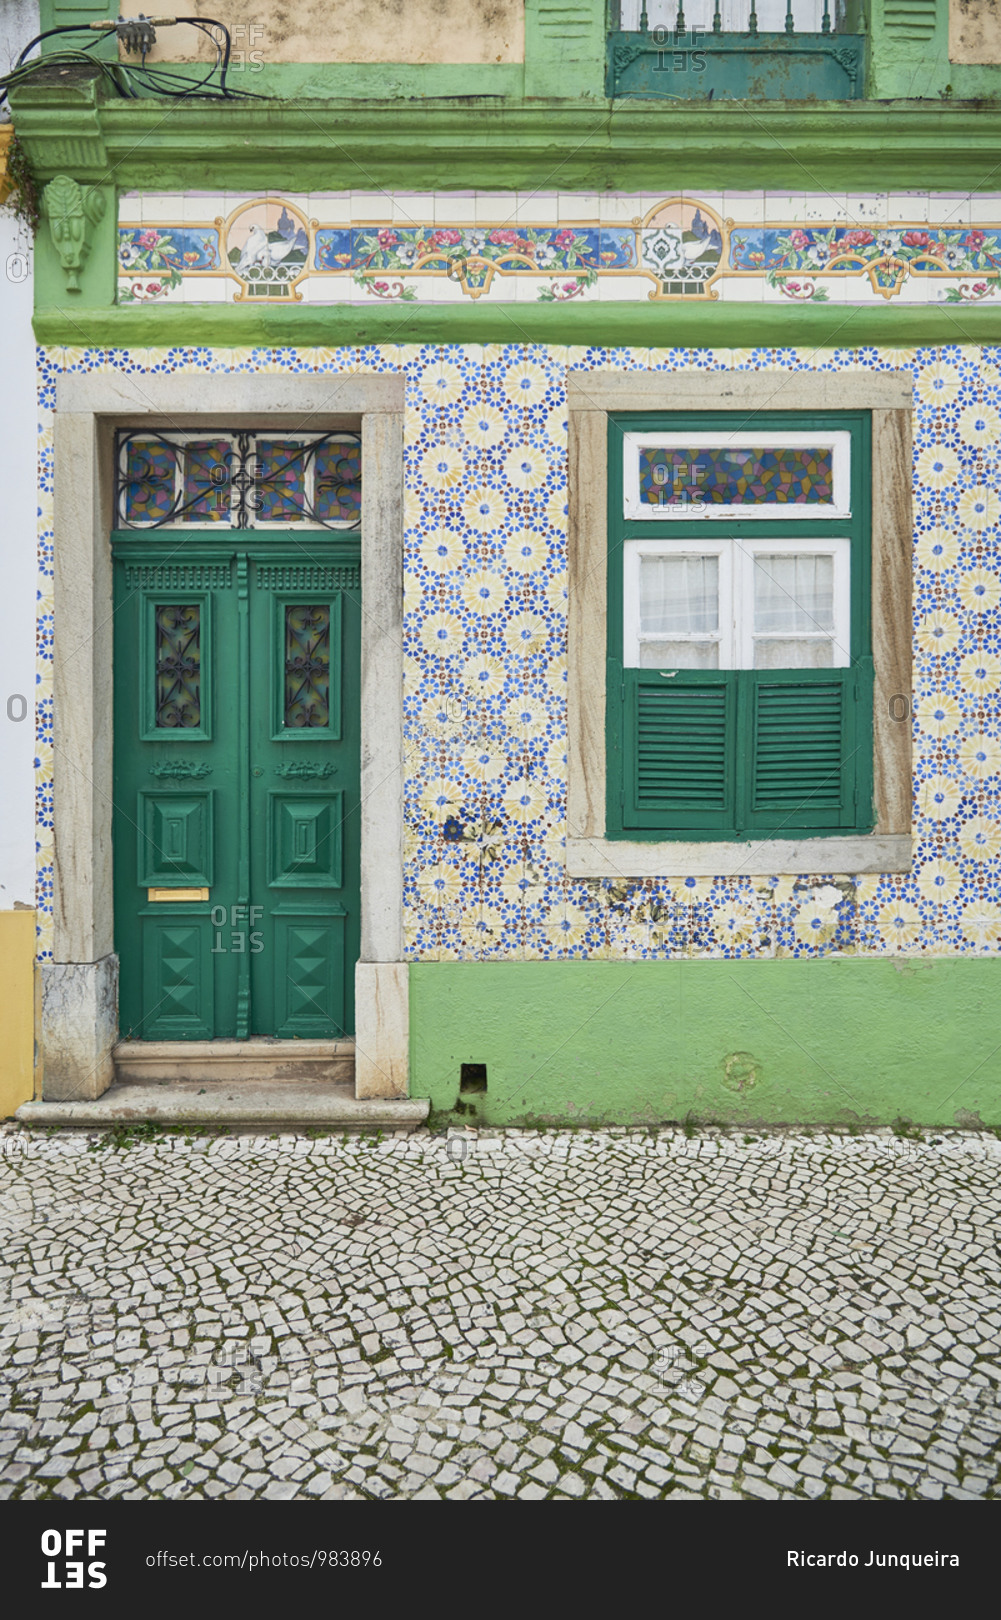 Home with Moorish tile around window and door in the Alcochete municipality near Lisbon